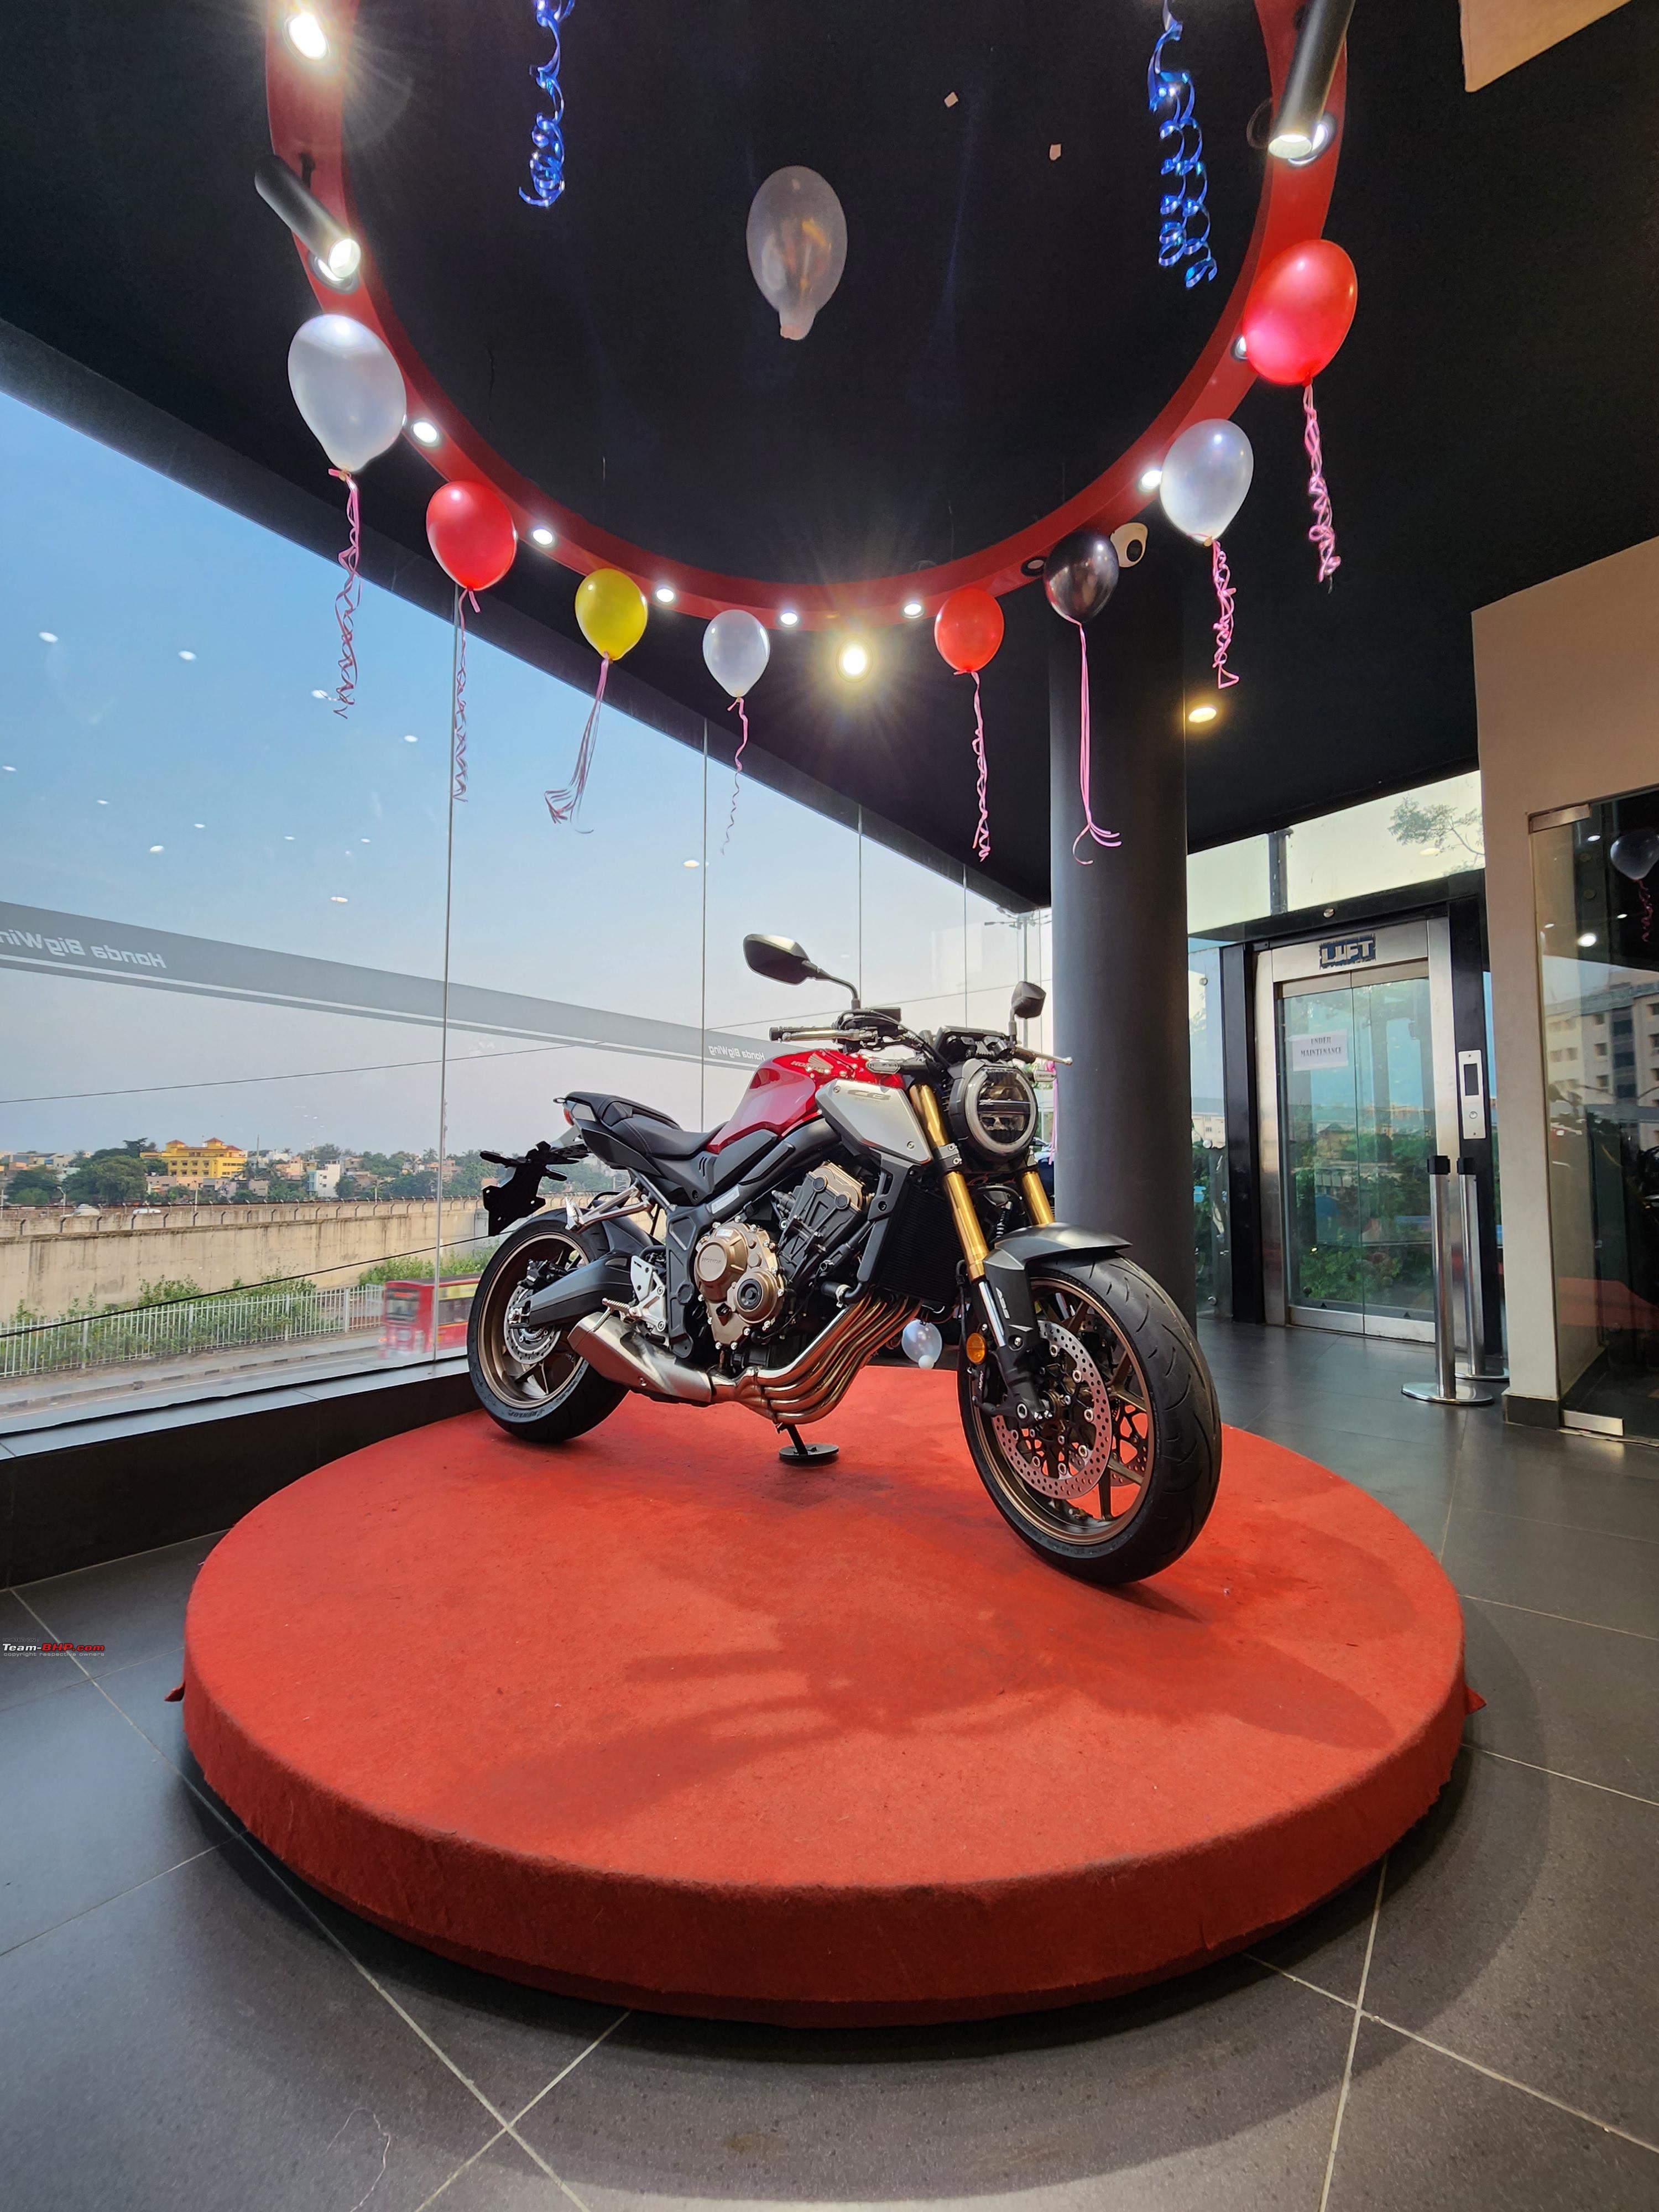 2022 Honda CB650R - Ownership and Accessories! - Team-BHP